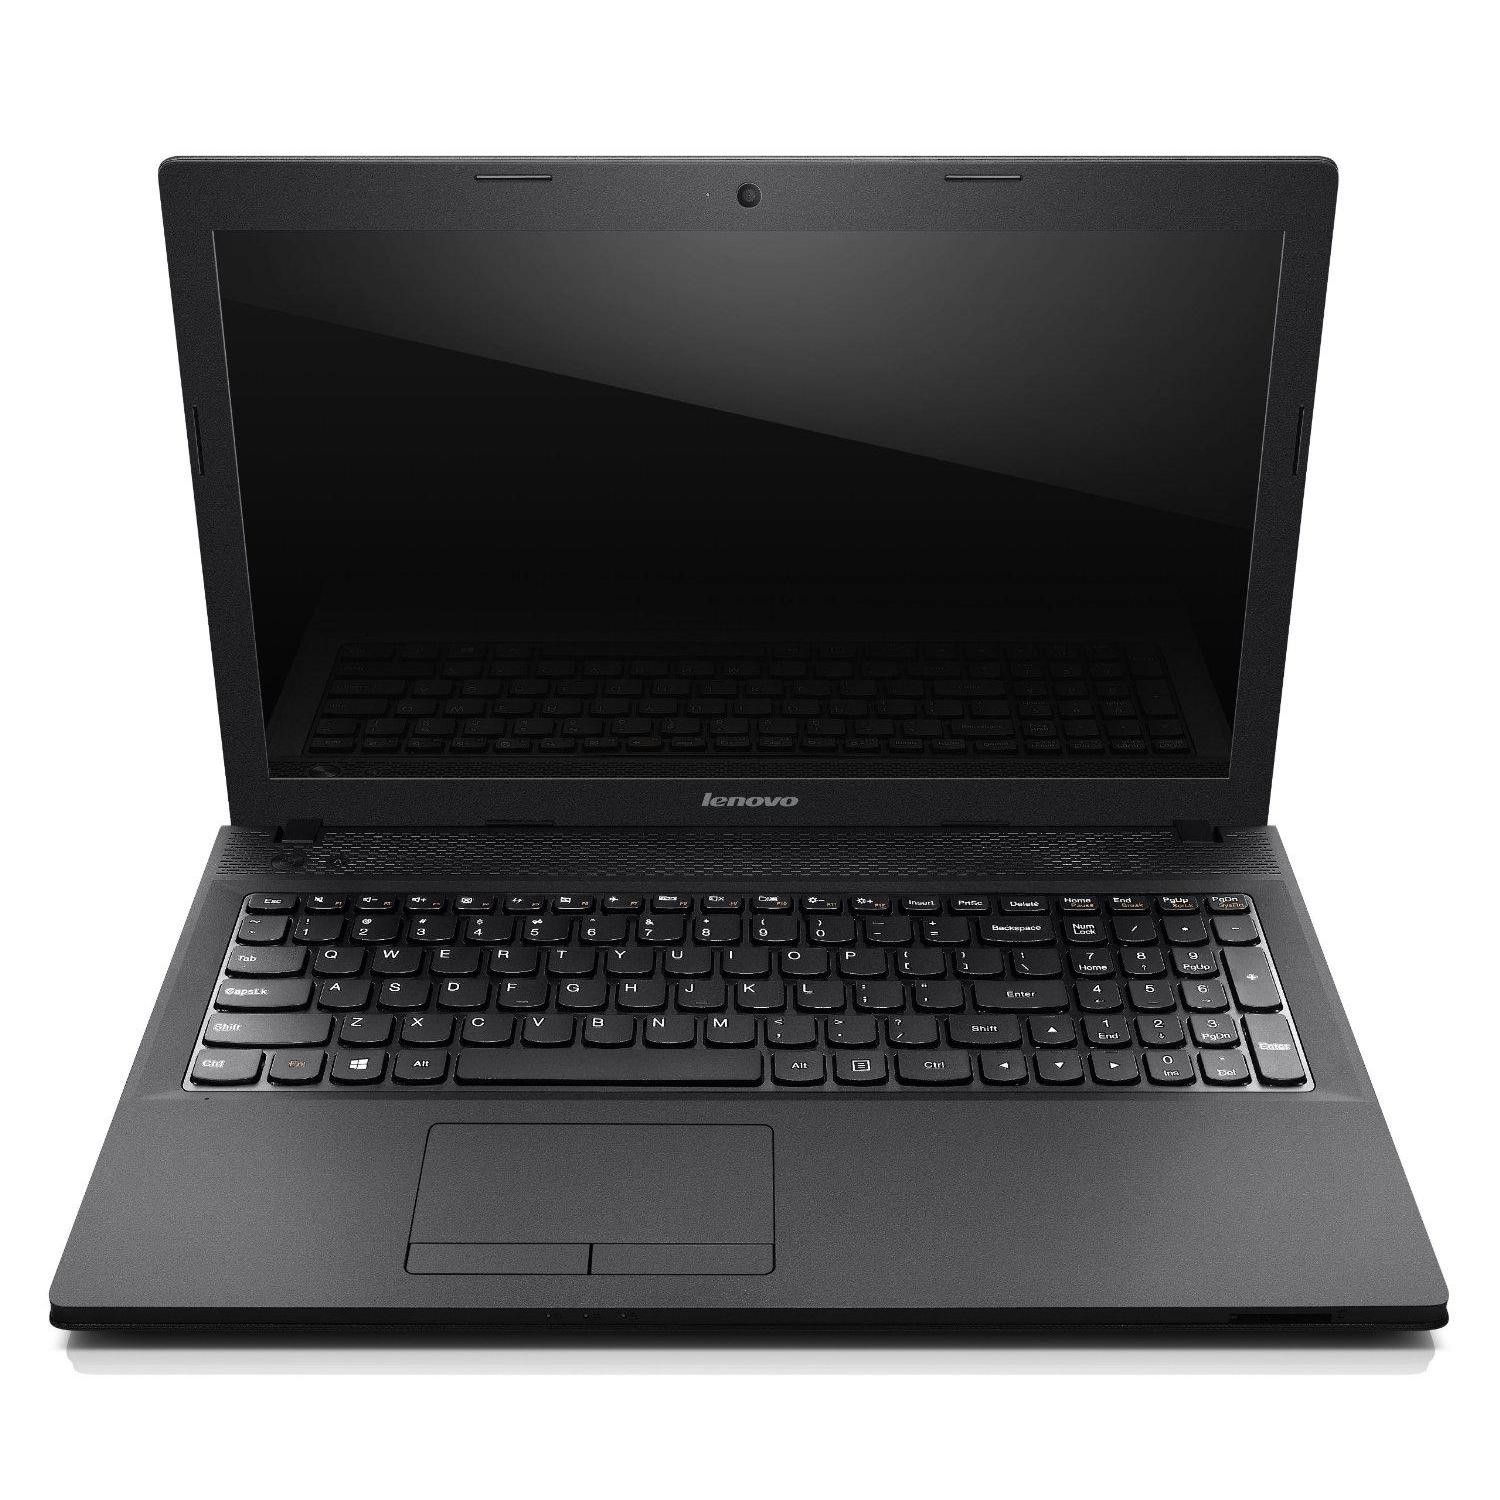 Refurbished LENOVO G500 20236 Core i3 8GB 1TB 15.6 Inch Windows 10 Laptop